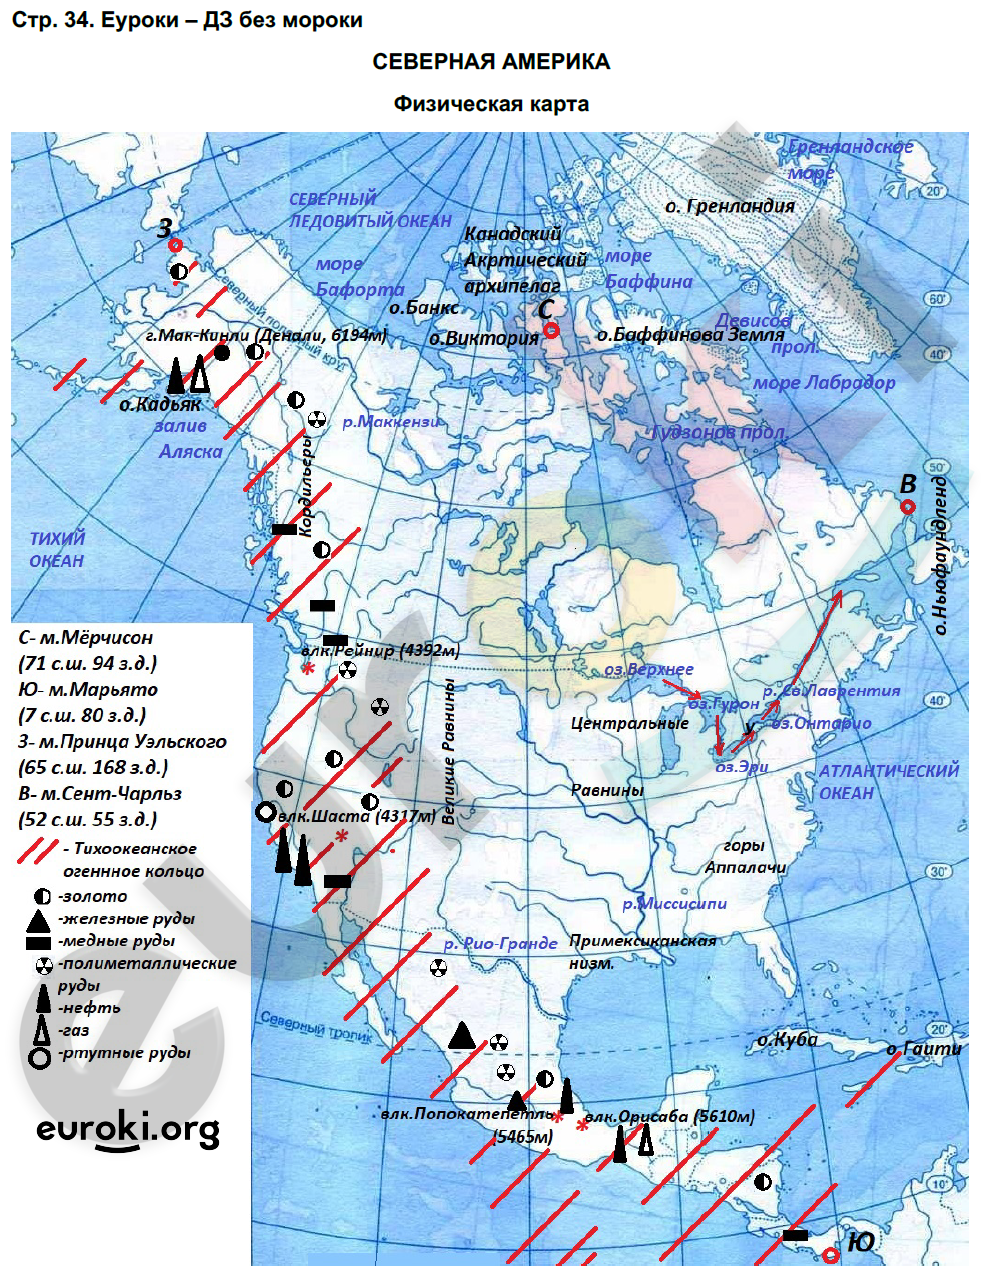 Северная Америка контурная карта 7 класс гдз Дрофа